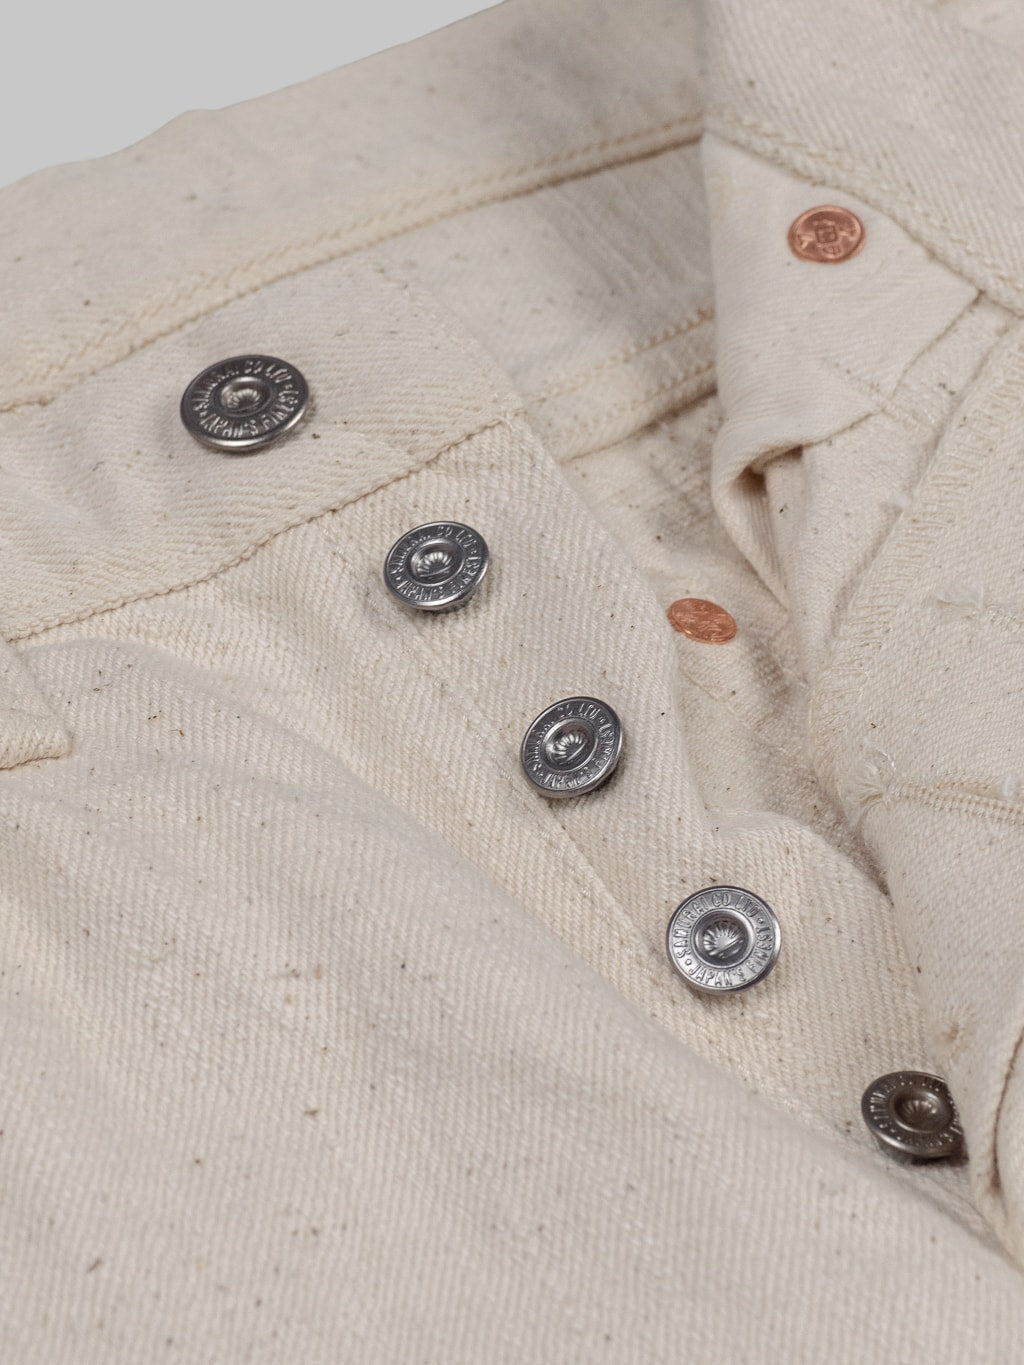 Samurai Jeans Japanese Cotton Ecru Jeans slim straight iron buttons